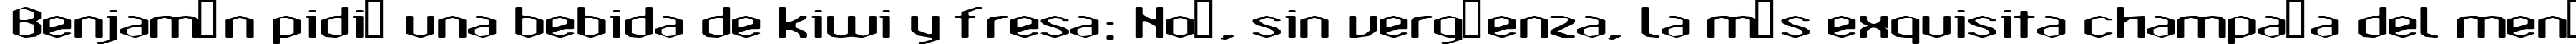 Пример написания шрифтом Amosis Technik текста на испанском